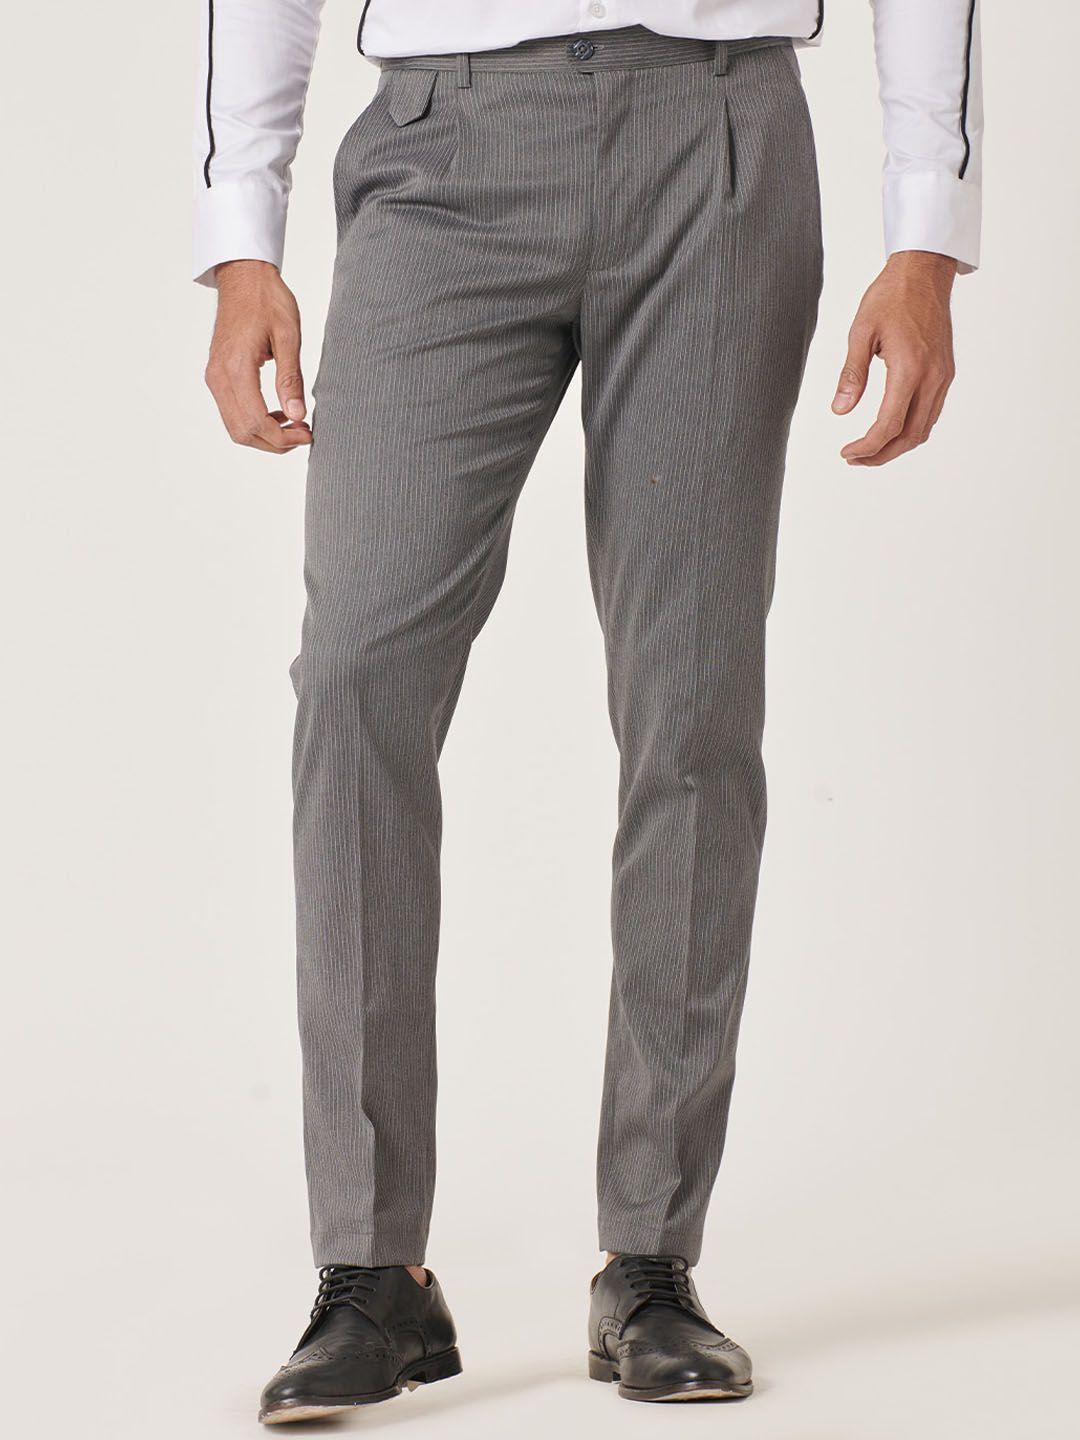 mr-button-men-slim-fit-mid-rise-formal-trousers